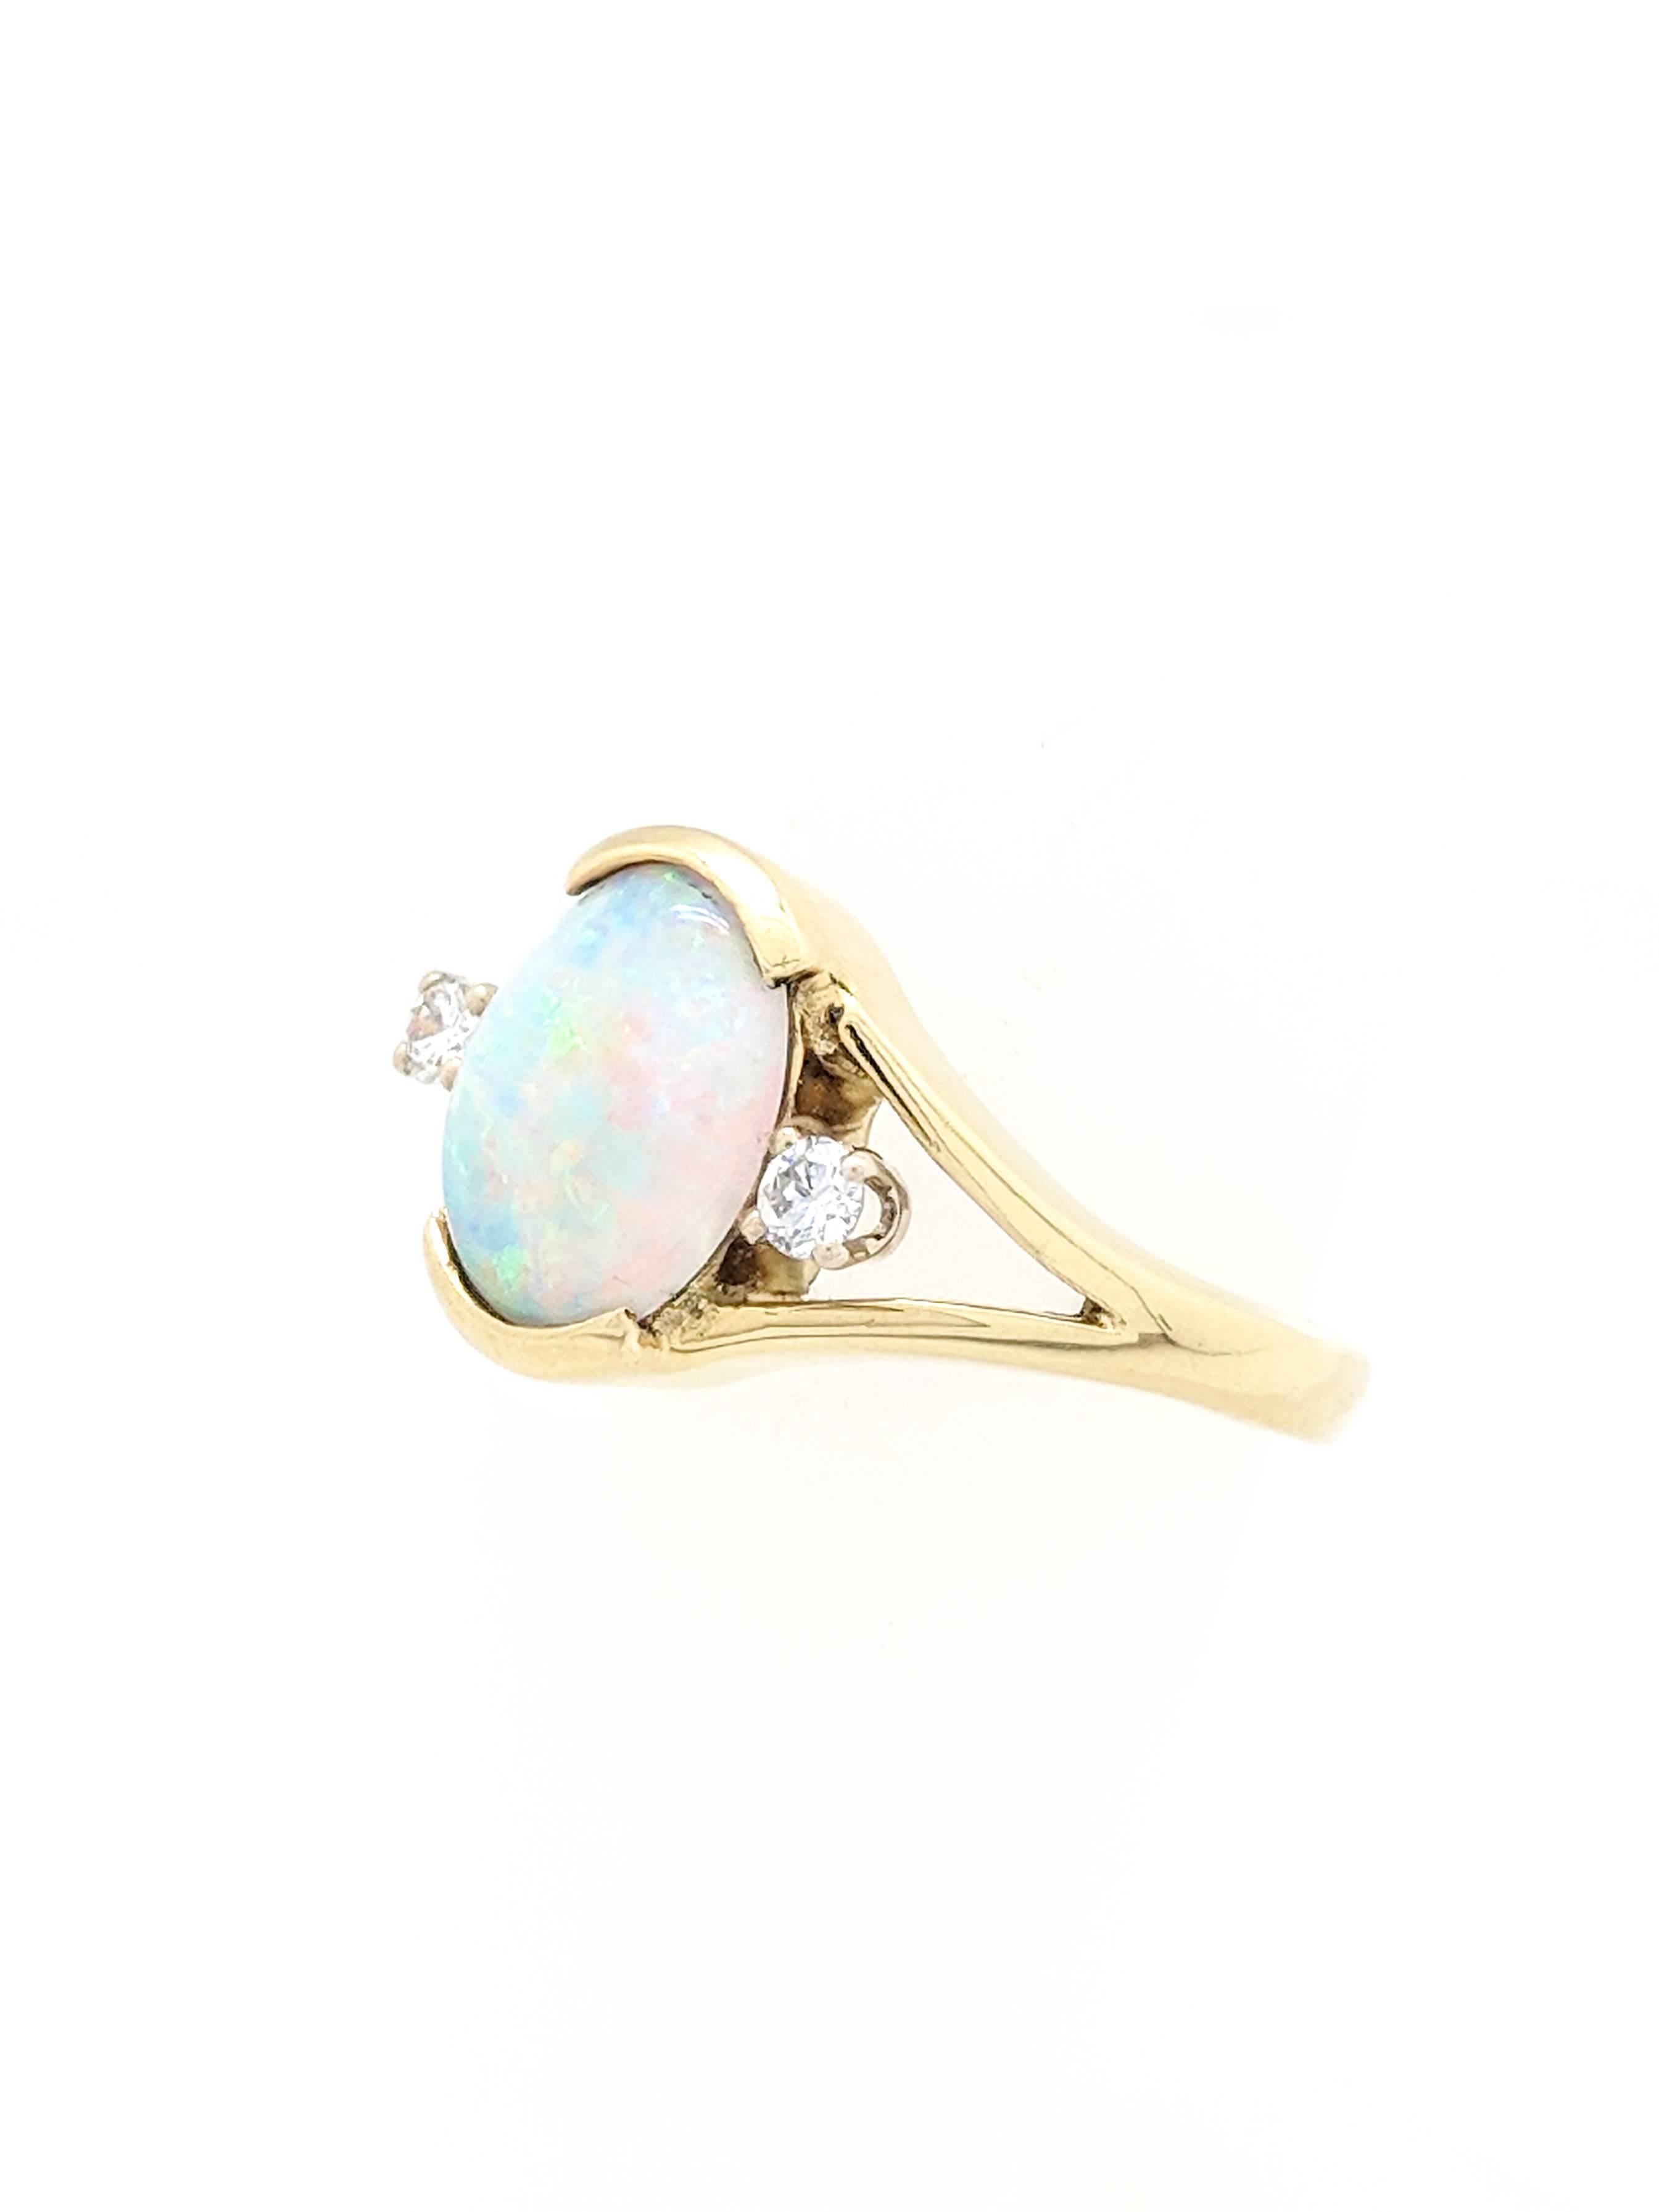 Women's or Men's 18 Karat Yellow Gold 1.65 Carat Natural Opal and Diamond Ring